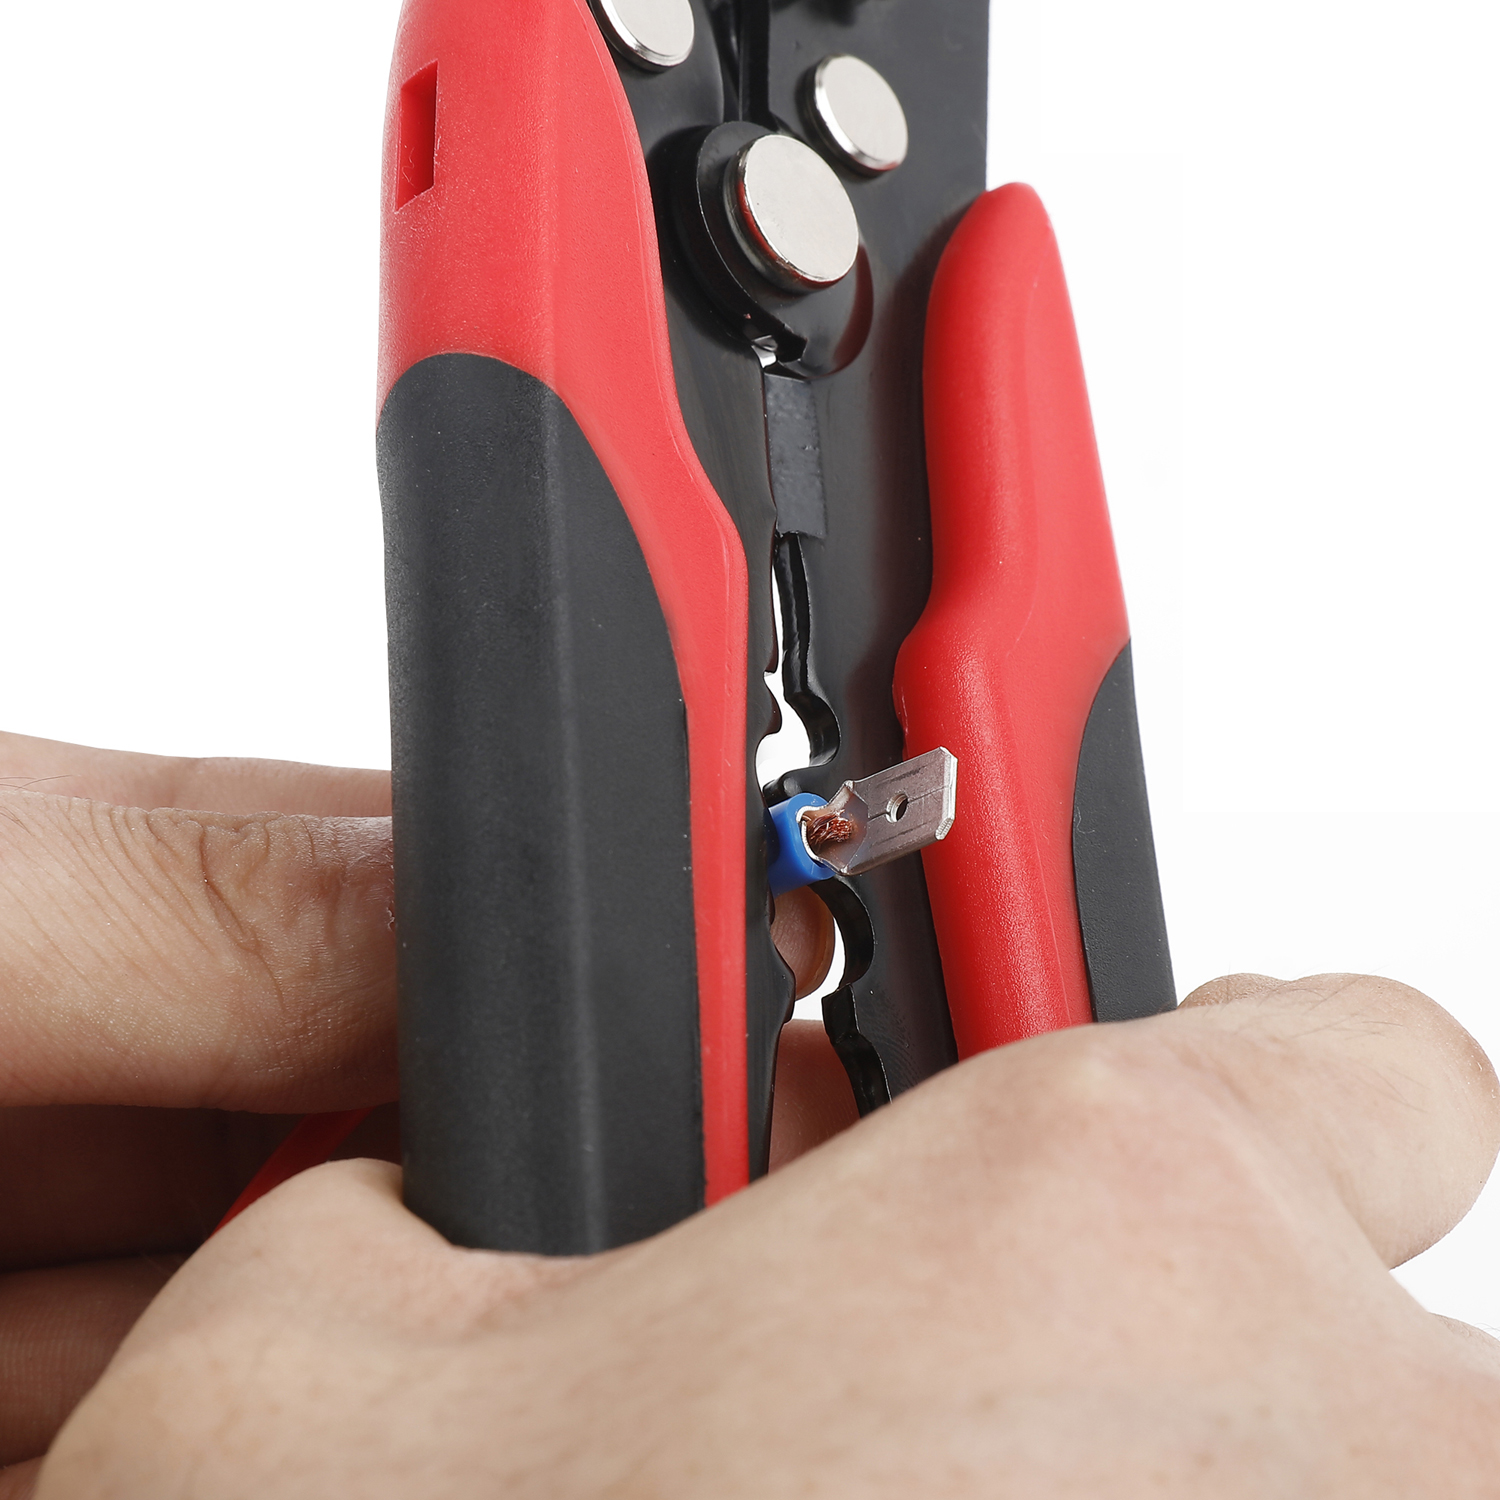 EverStart 8-inch Self Adjusting Wire Stripper, Model 5138, Black ,Red, UL Listed, New - image 5 of 10